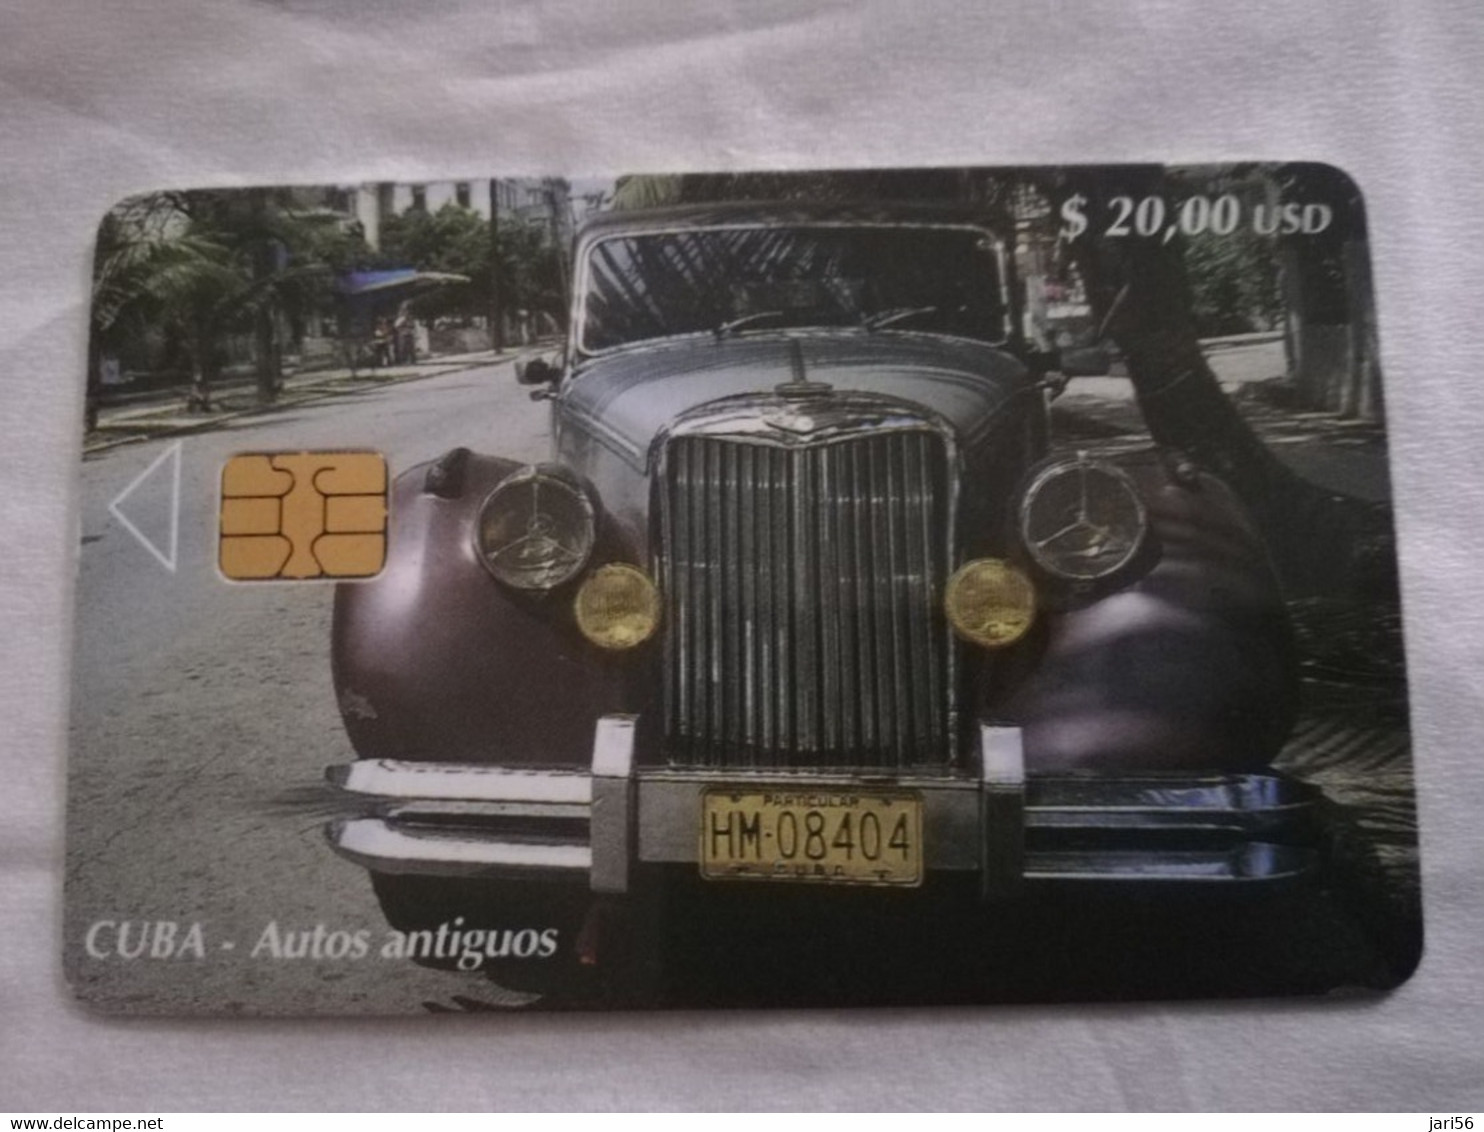 CUBA $20,00   CHIPCARD   AUTOS ANTIGUOS / OLD CARS            Fine Used Card  ** 6827** - Cuba